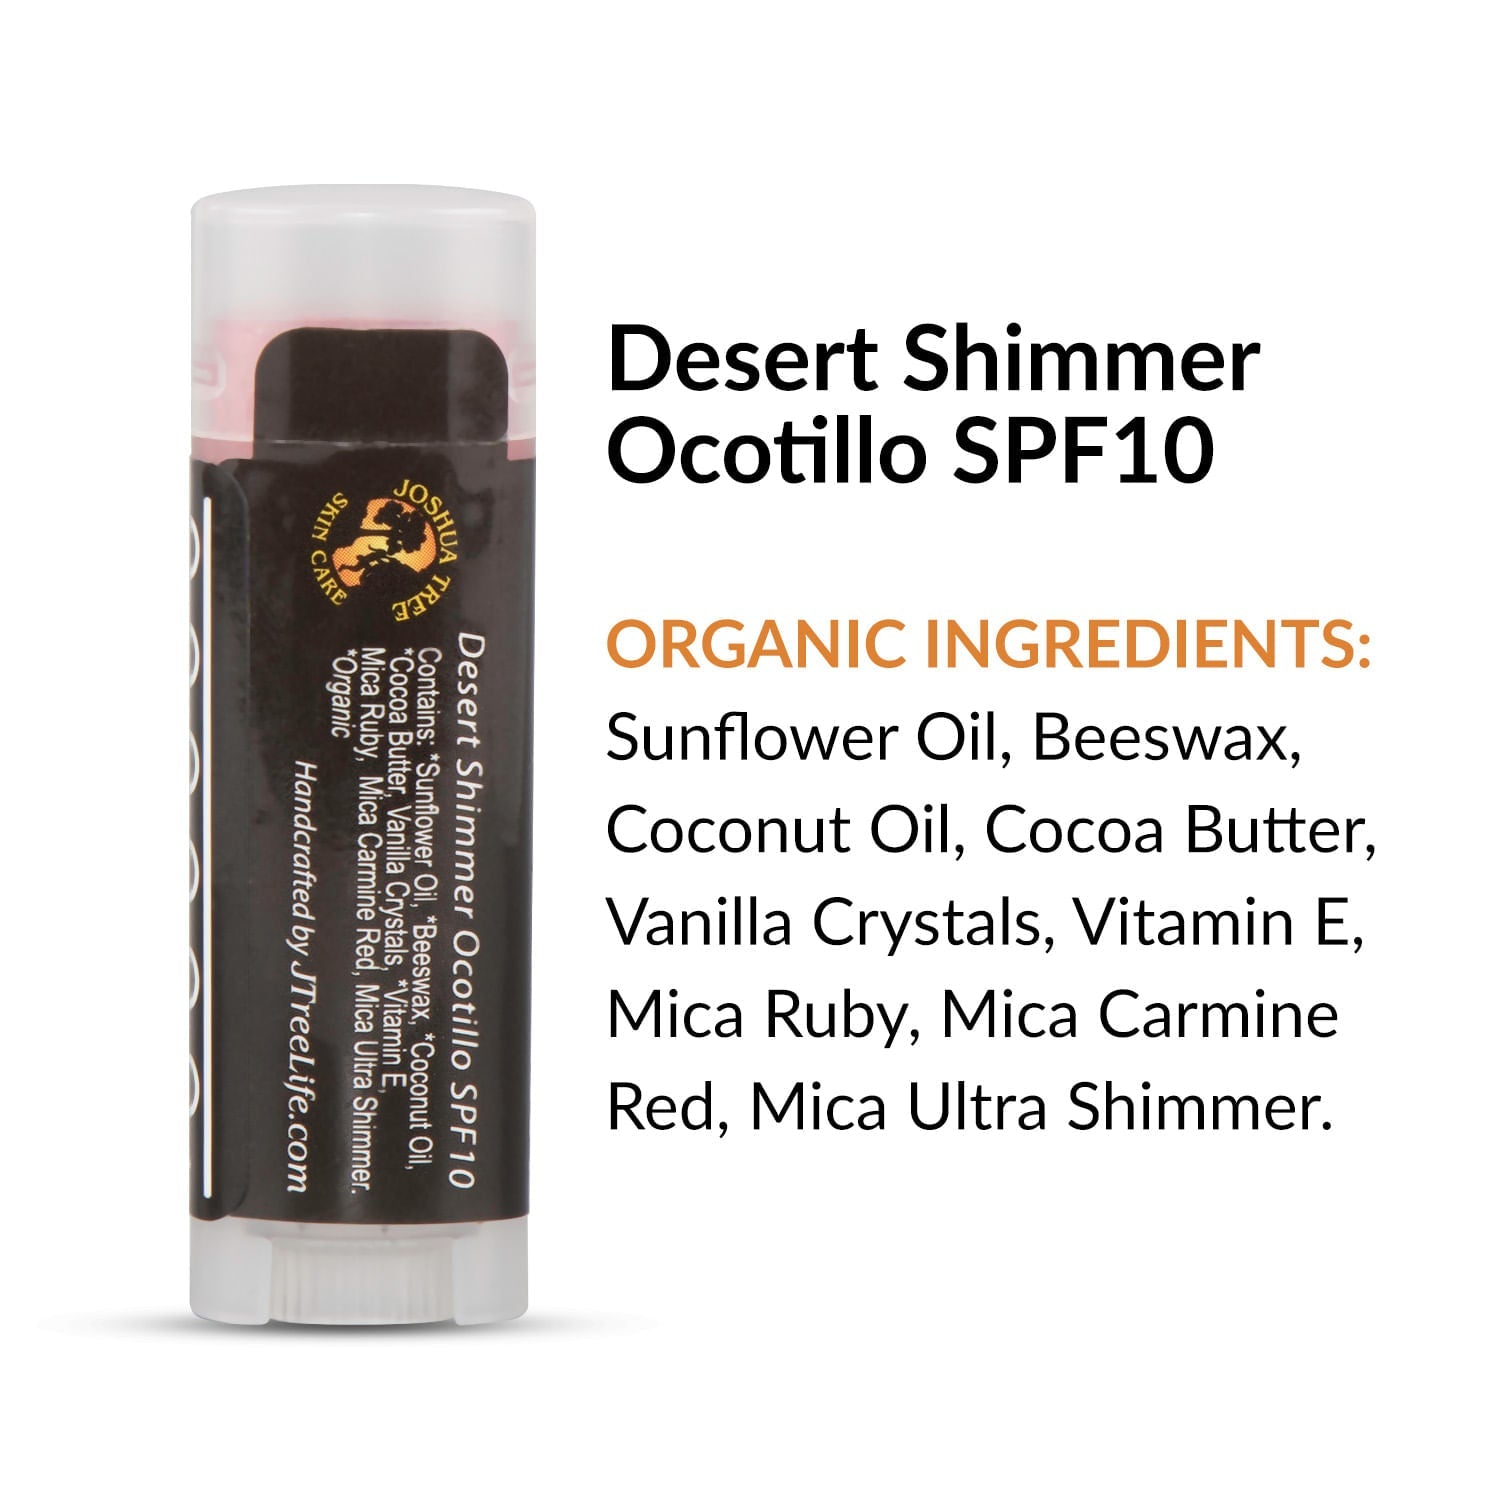 Sunflower oil, Beeswax, Coconut Oil, Cocoa Butter, Vanilla Crystals, Vitamin E, Mica Ruby, Mica Carmine Red, Mica Ultra Shimmer. 